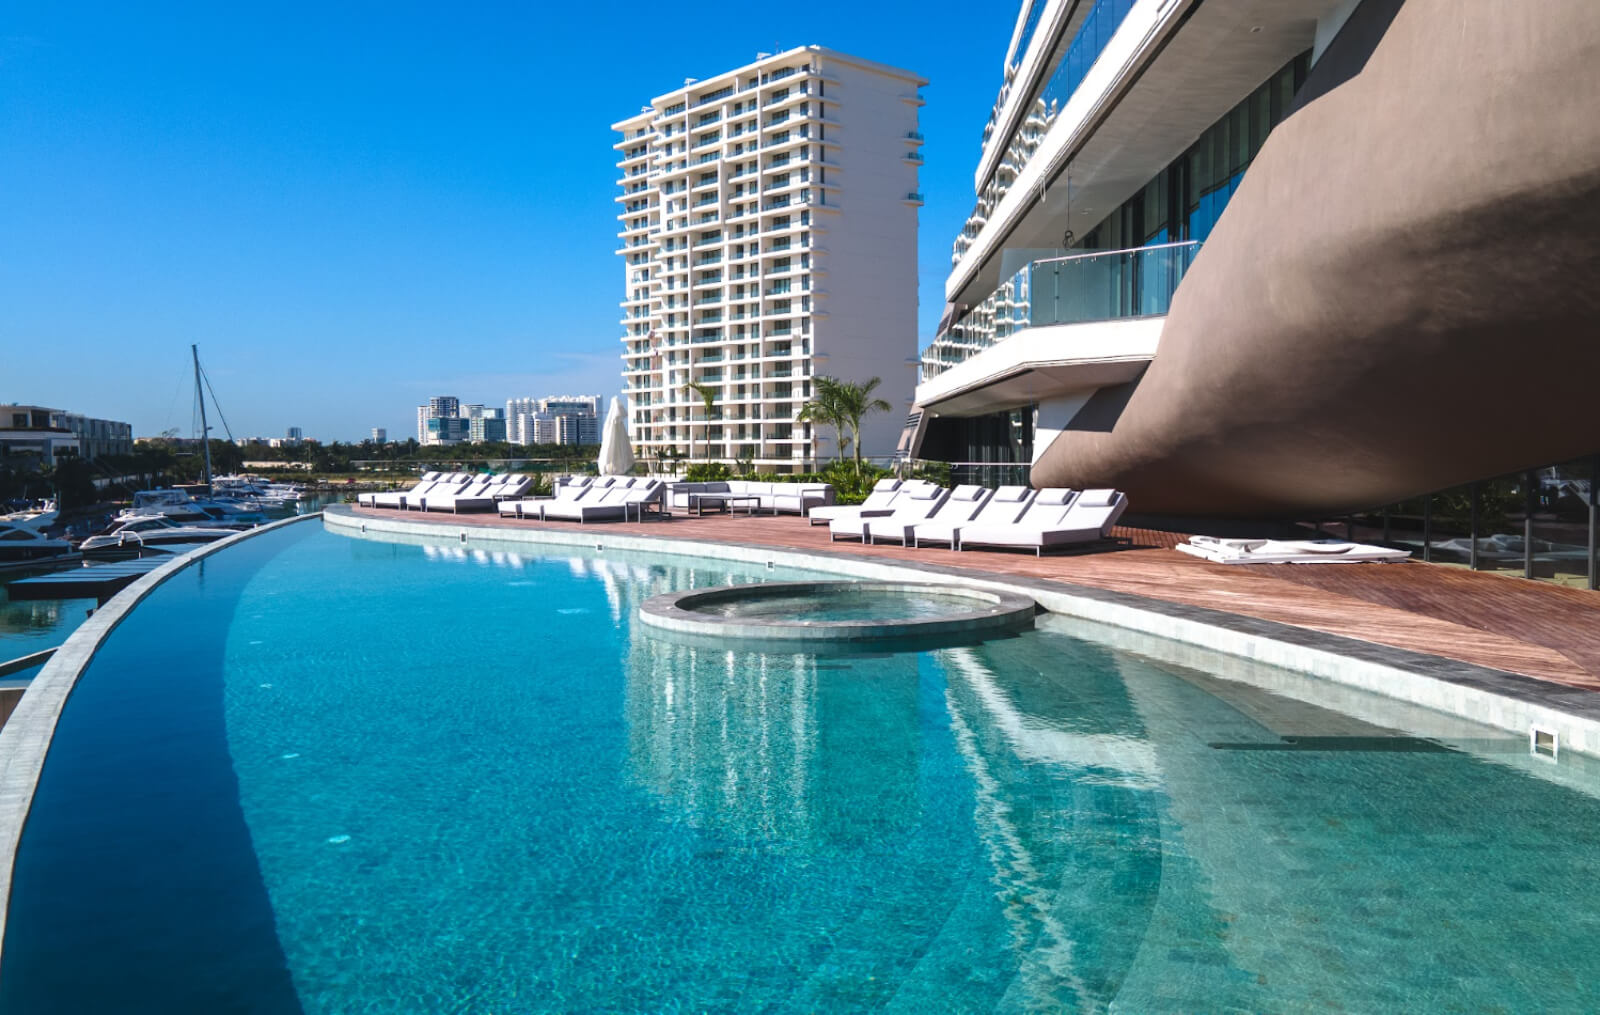 Beautiful sea views, Penthouse for sale Cancun, pre-construction.